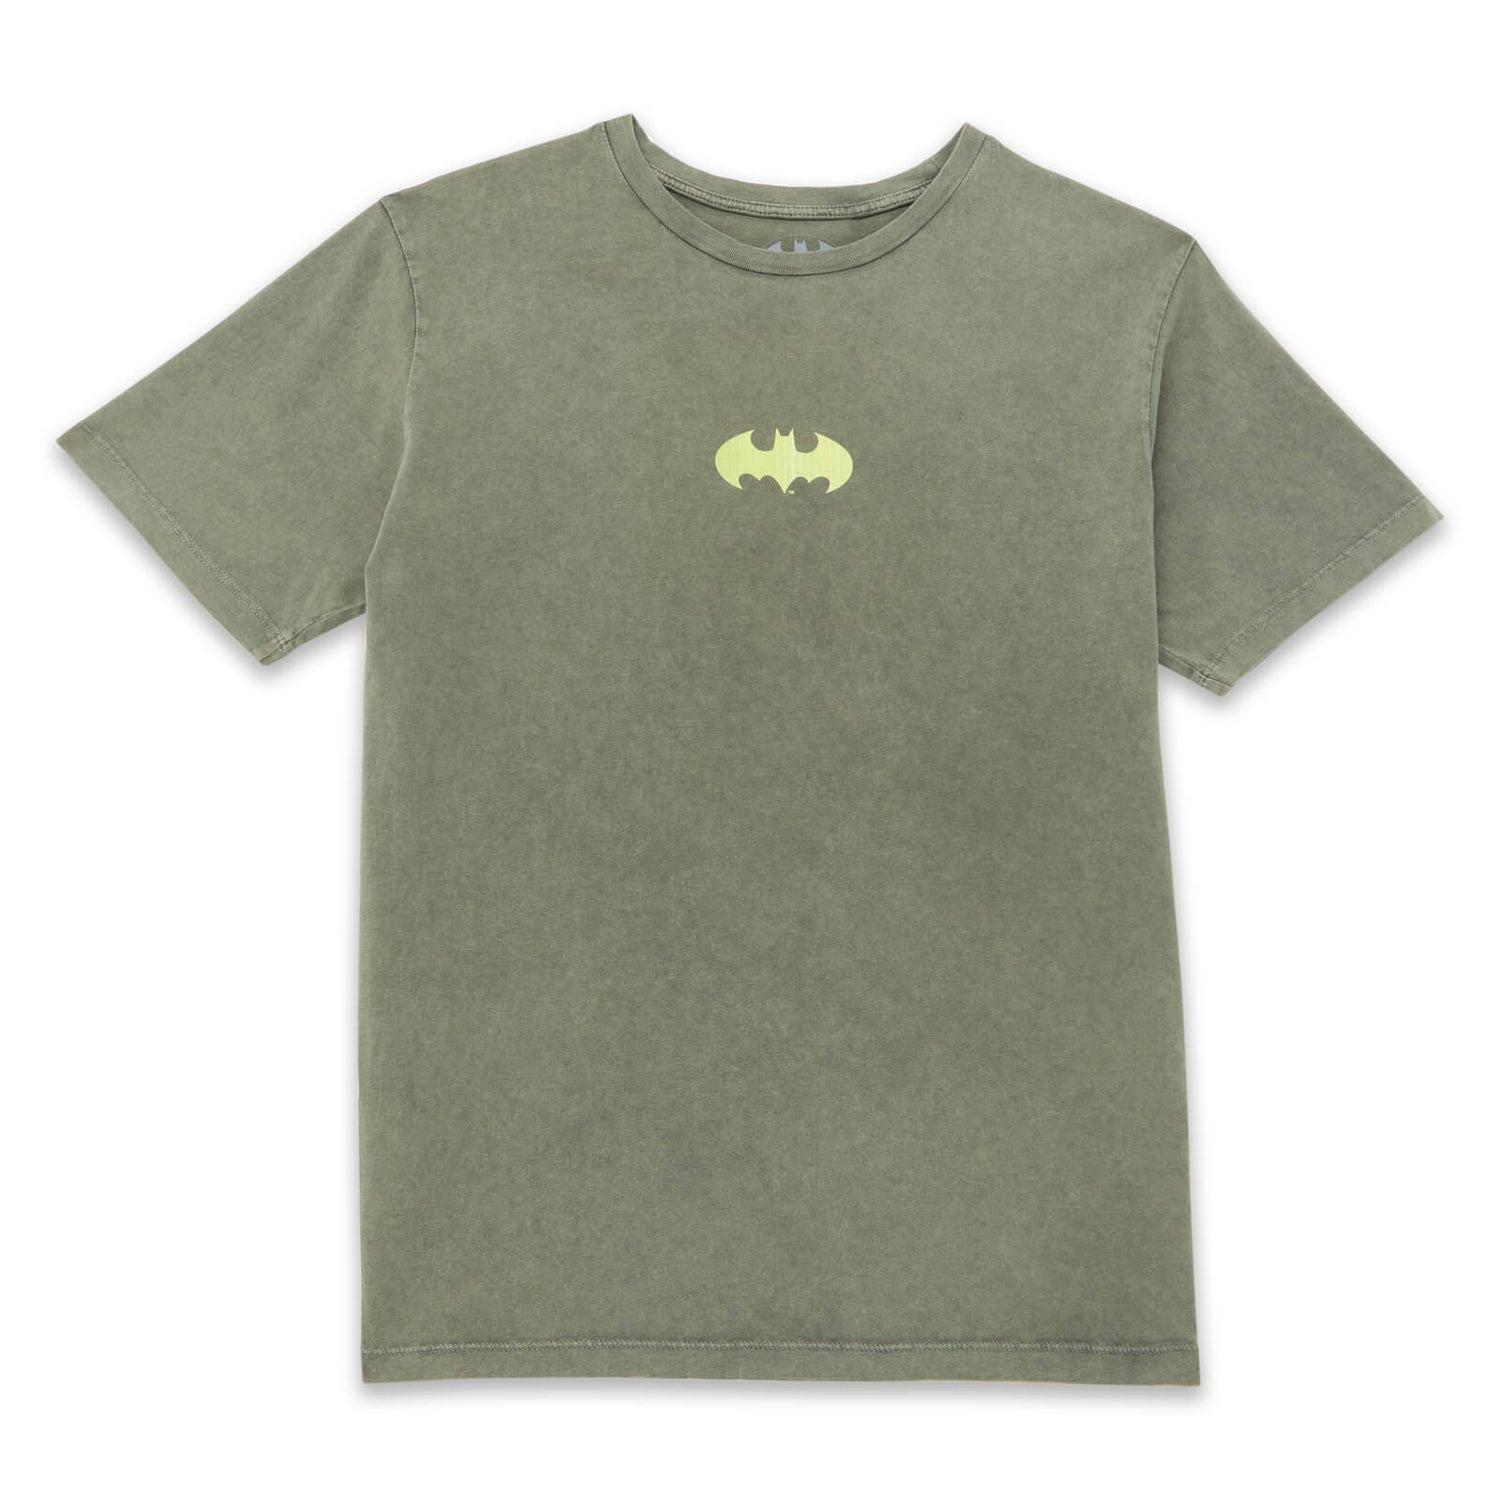 Batman Spray Paint Unisex T-Shirt - Khaki Acid Wash